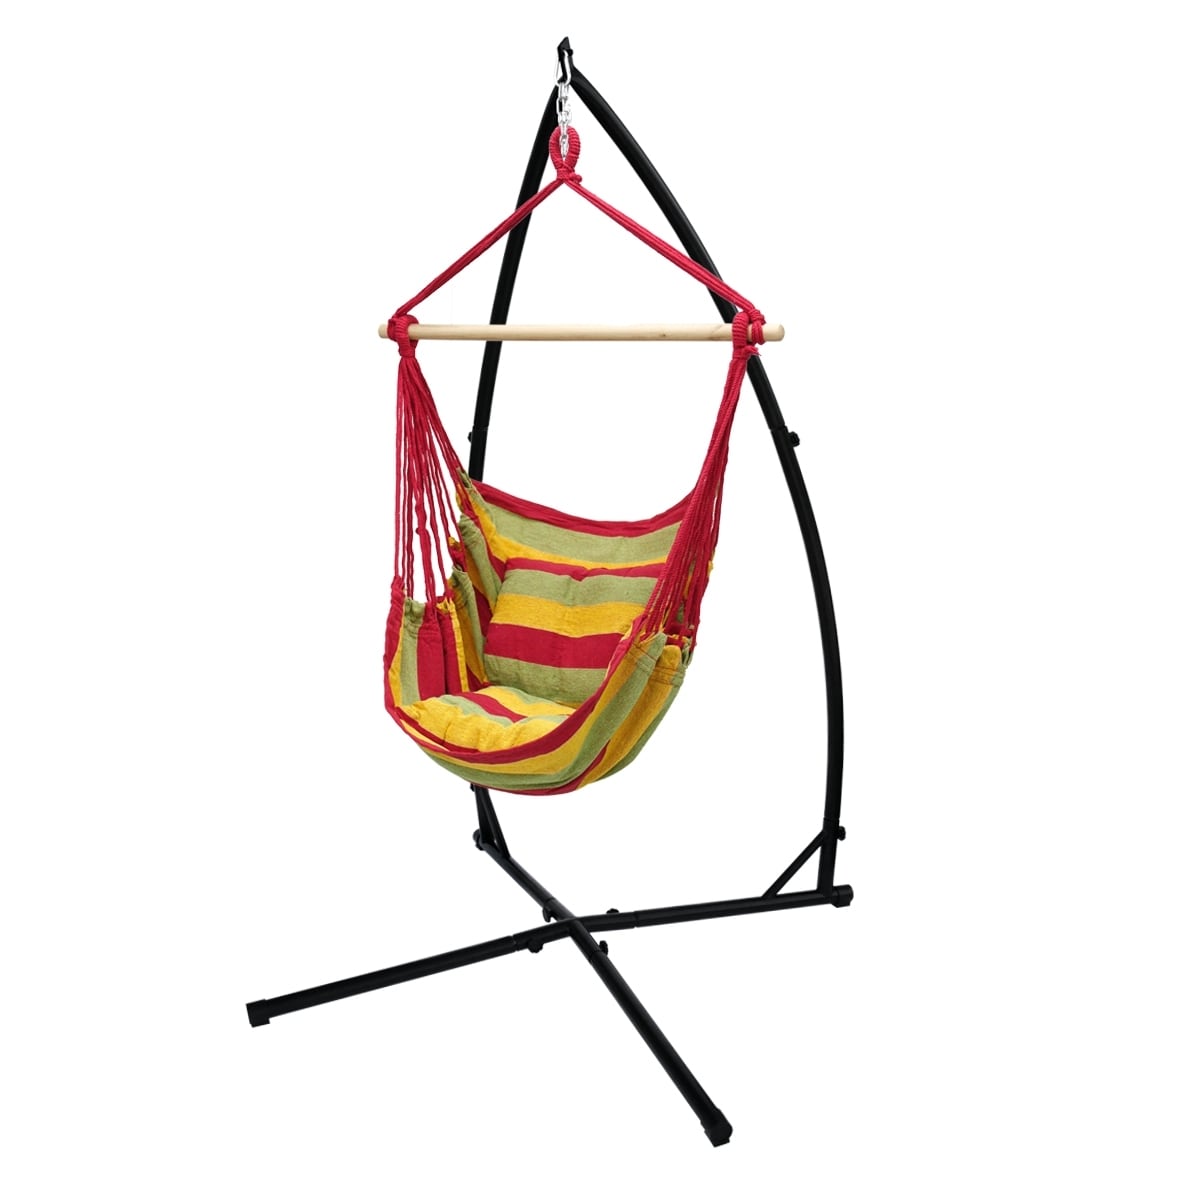 Hængende stol hængende stol hængende swing rød / gul / orange + hængekøje  stol | Elgiganten